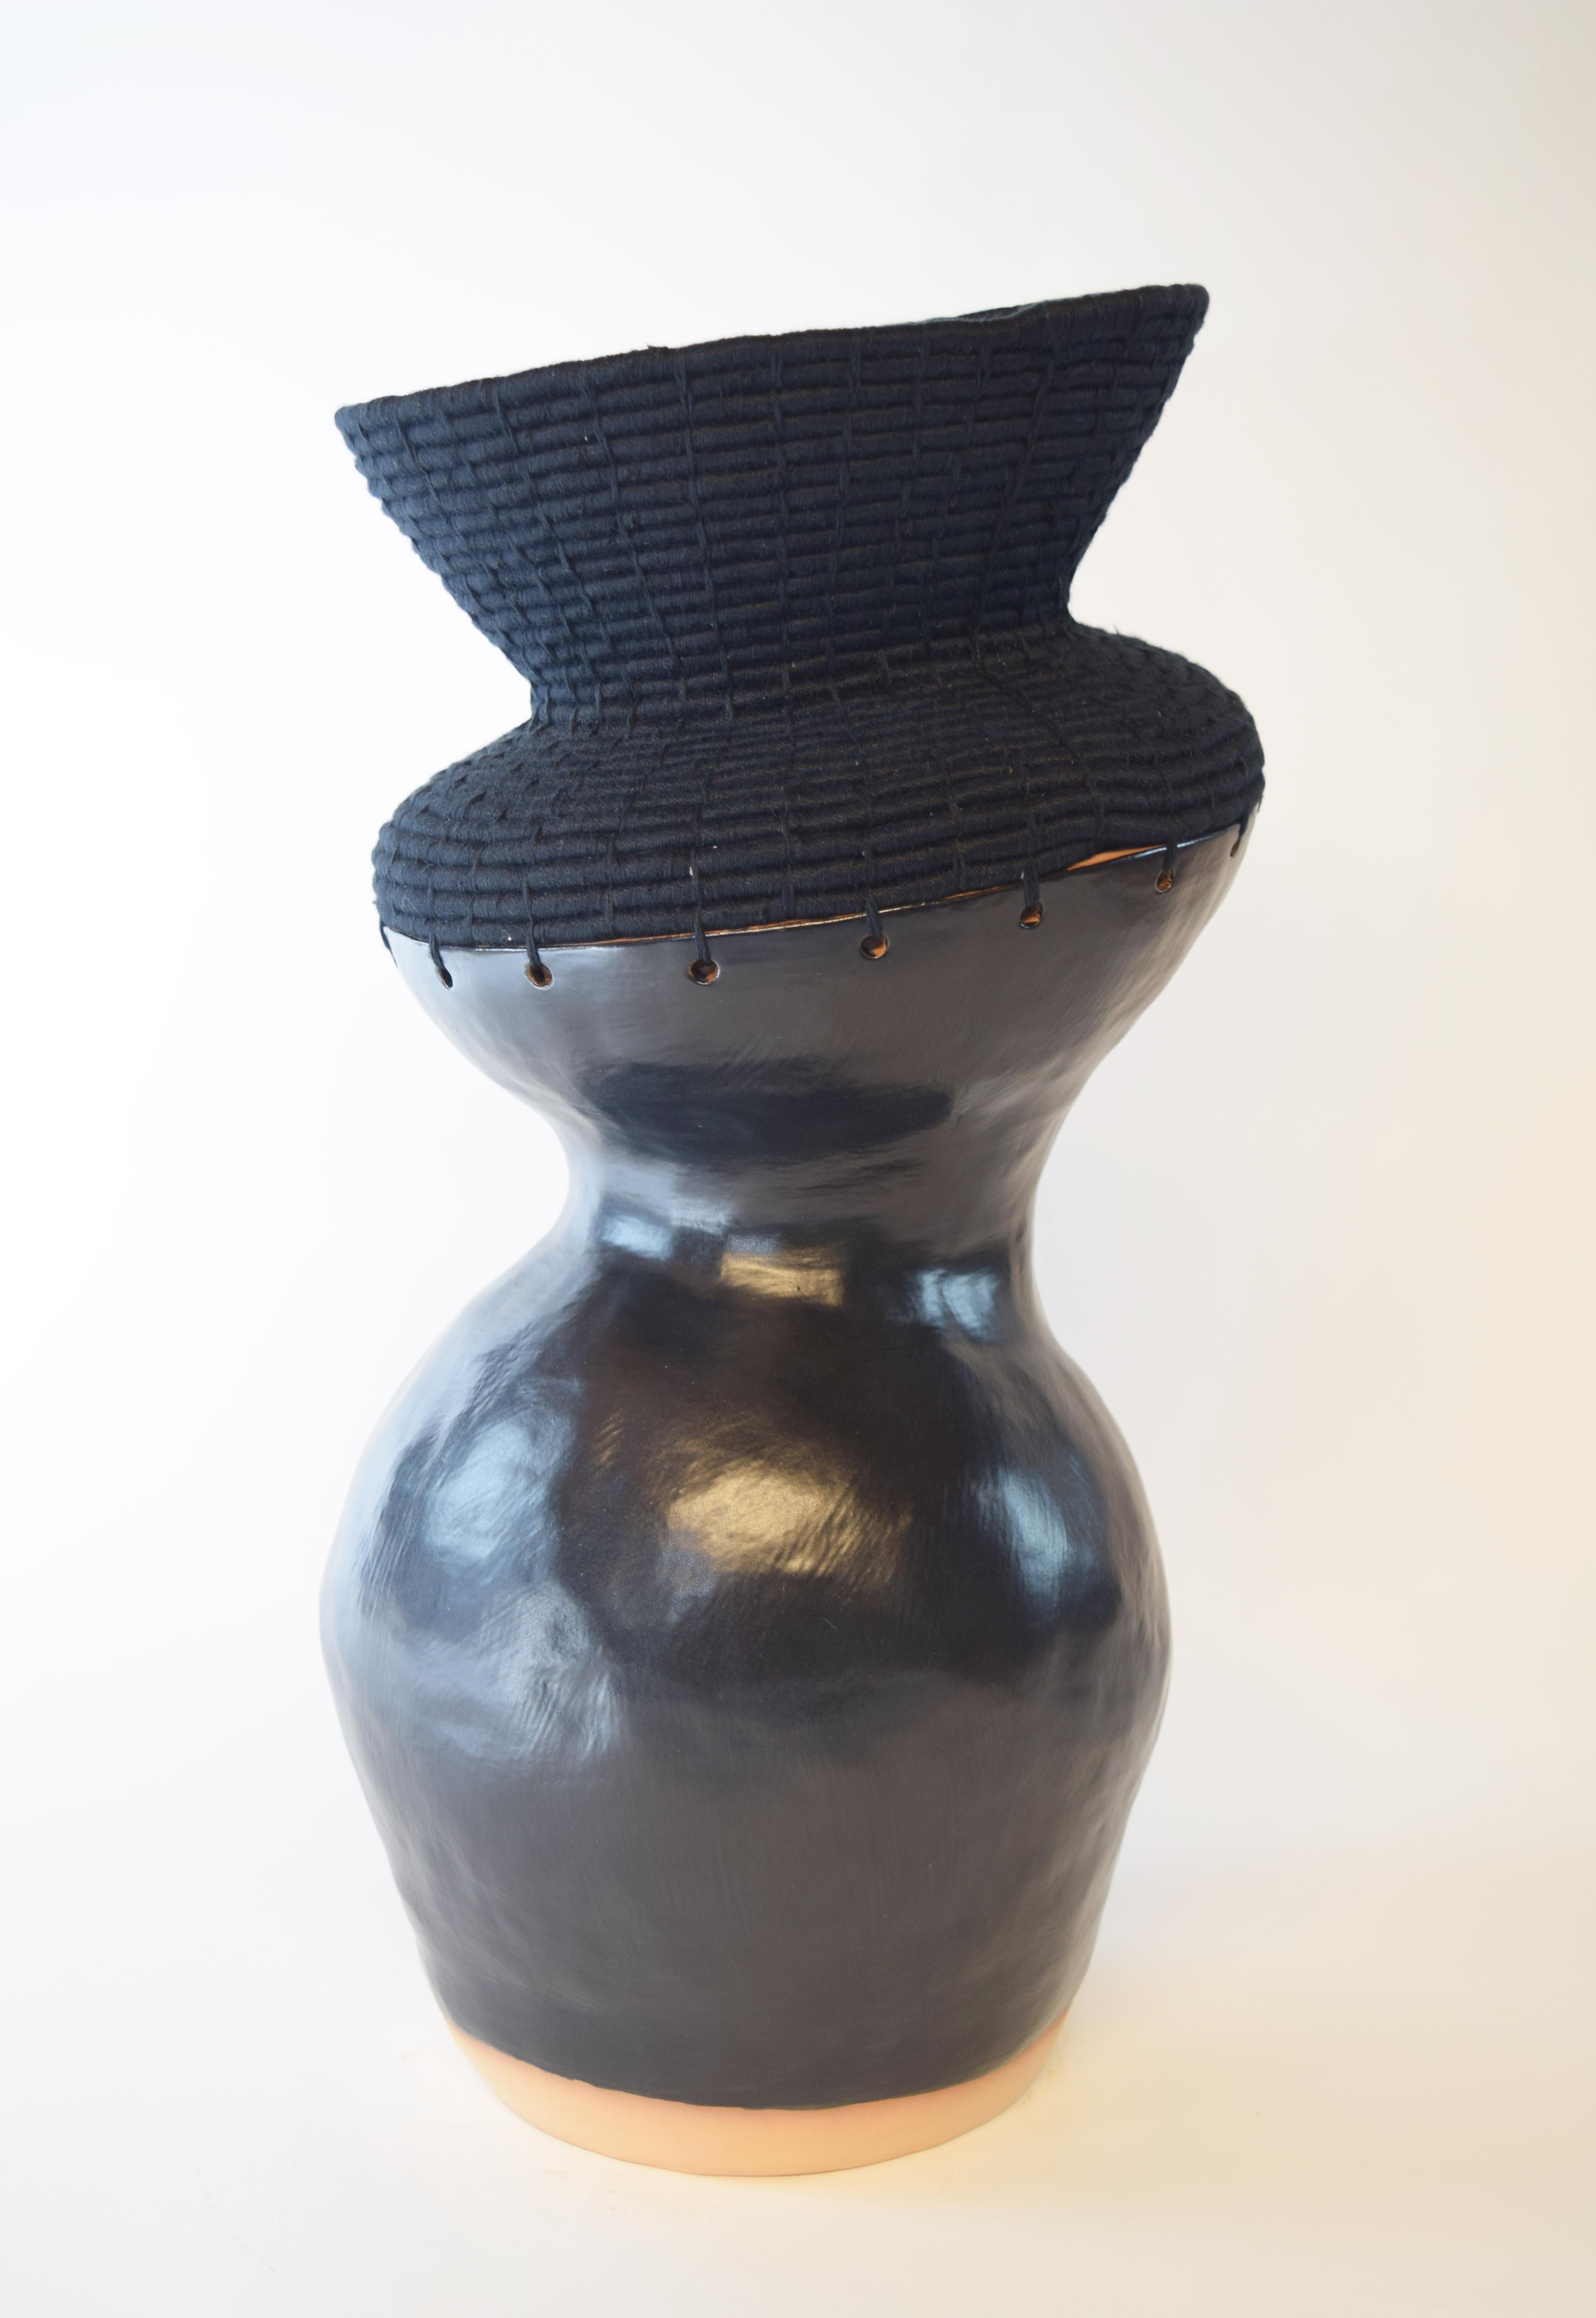 Organic Modern One of a Kind Ceramic & Woven Fiber Vessel #761, Satin Black Glaze, Black Cotton